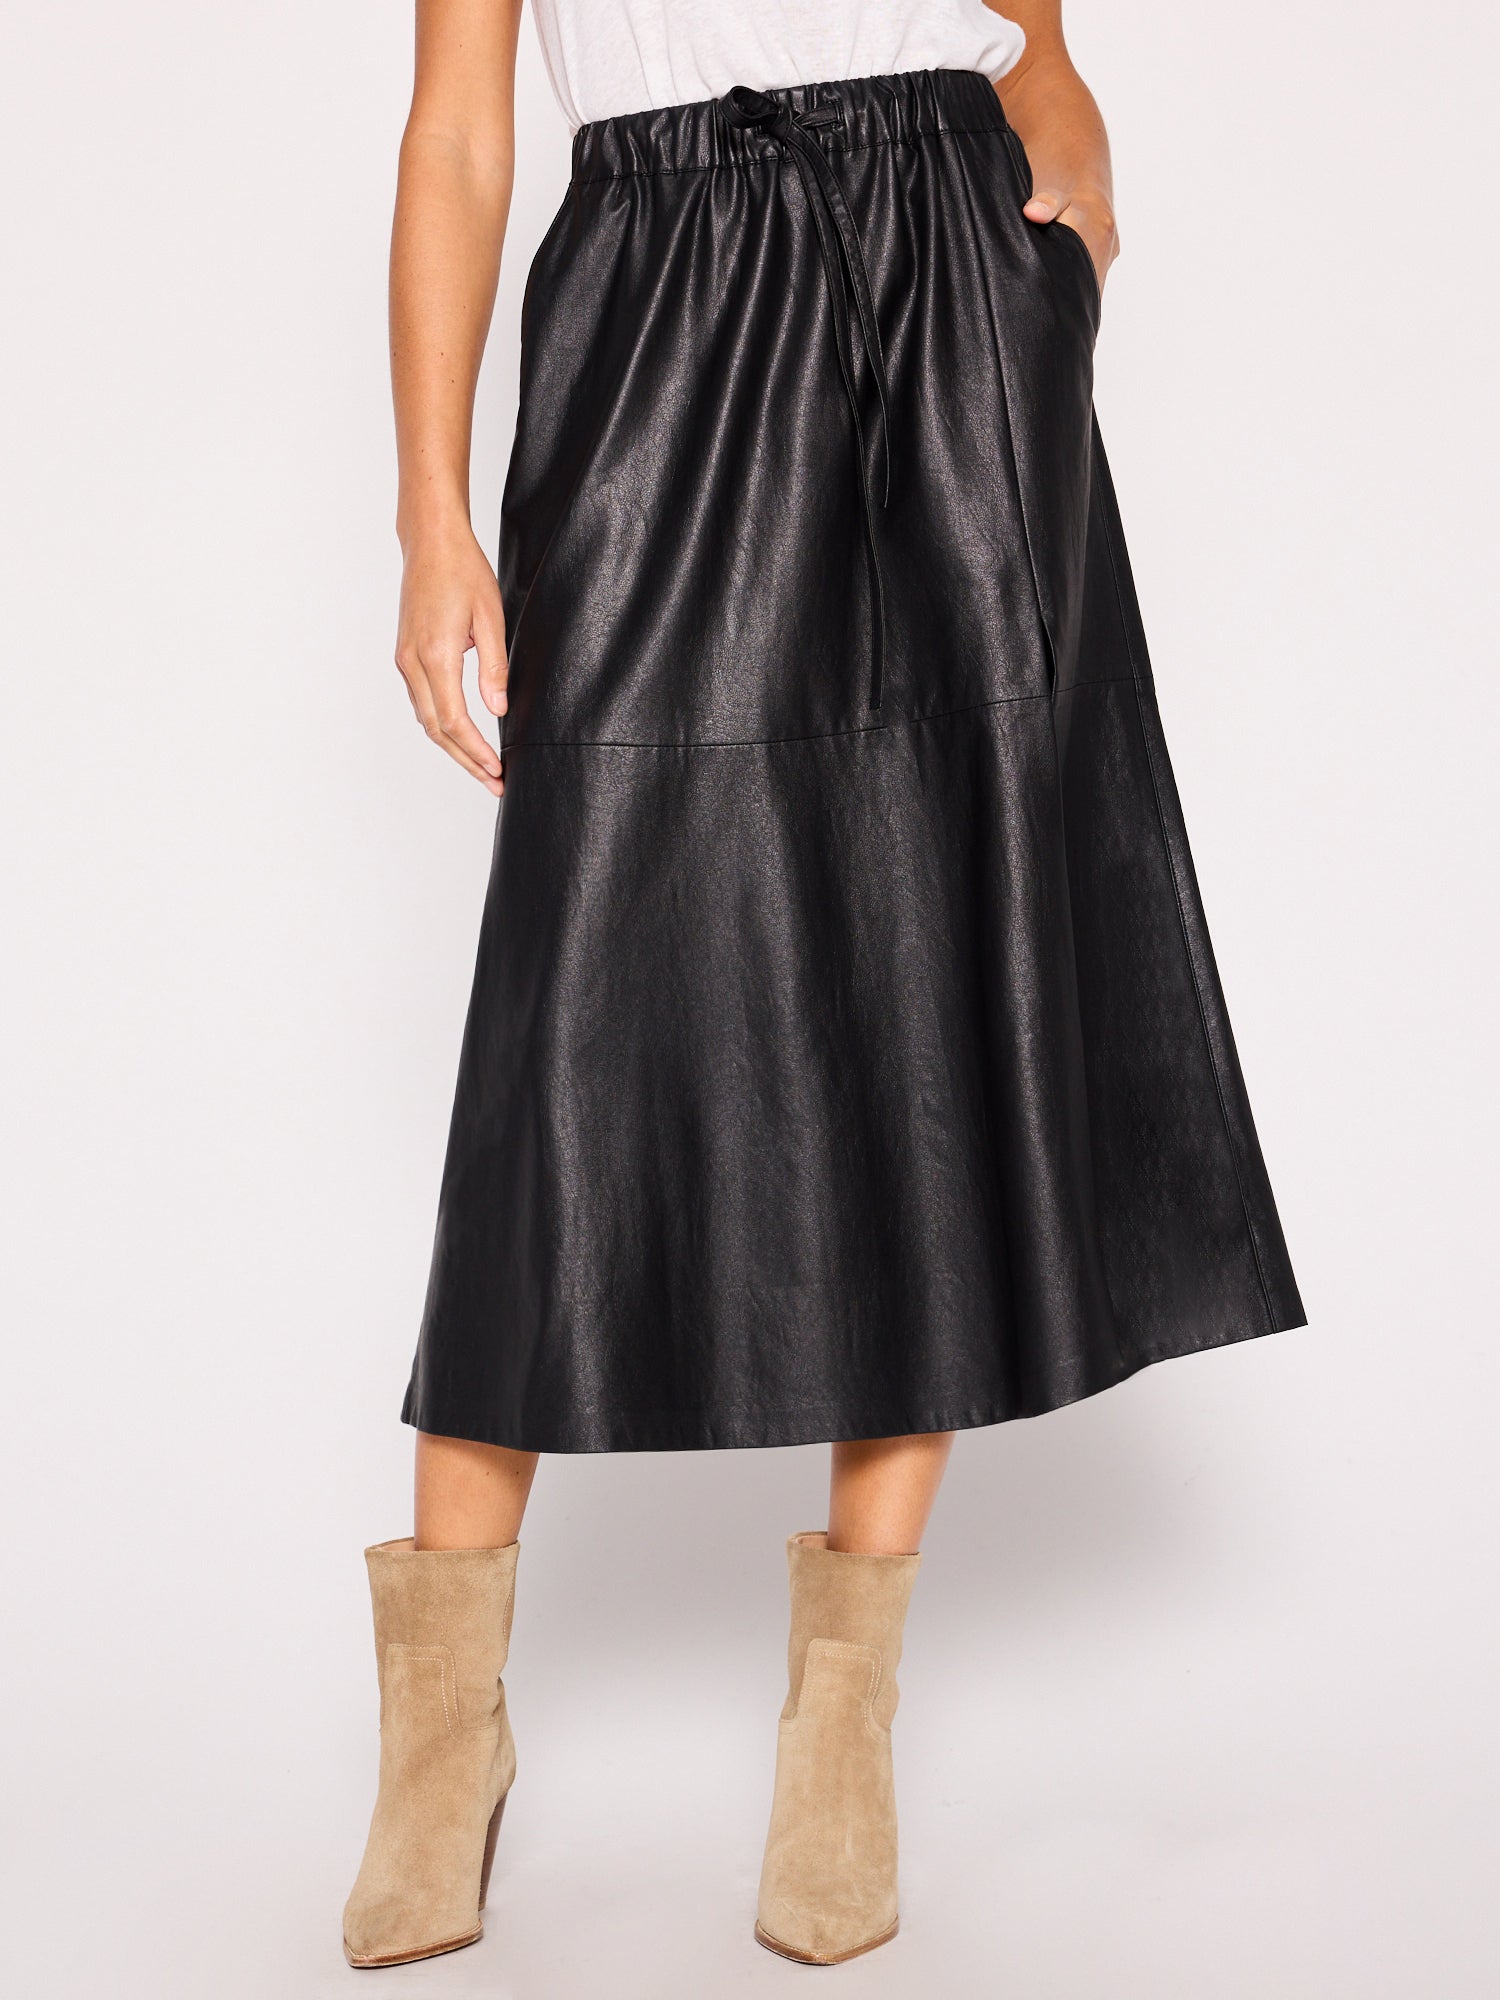 Black Midi Skirt - Vegan Leather Skirt - High-Rise Midi Skirt - Lulus